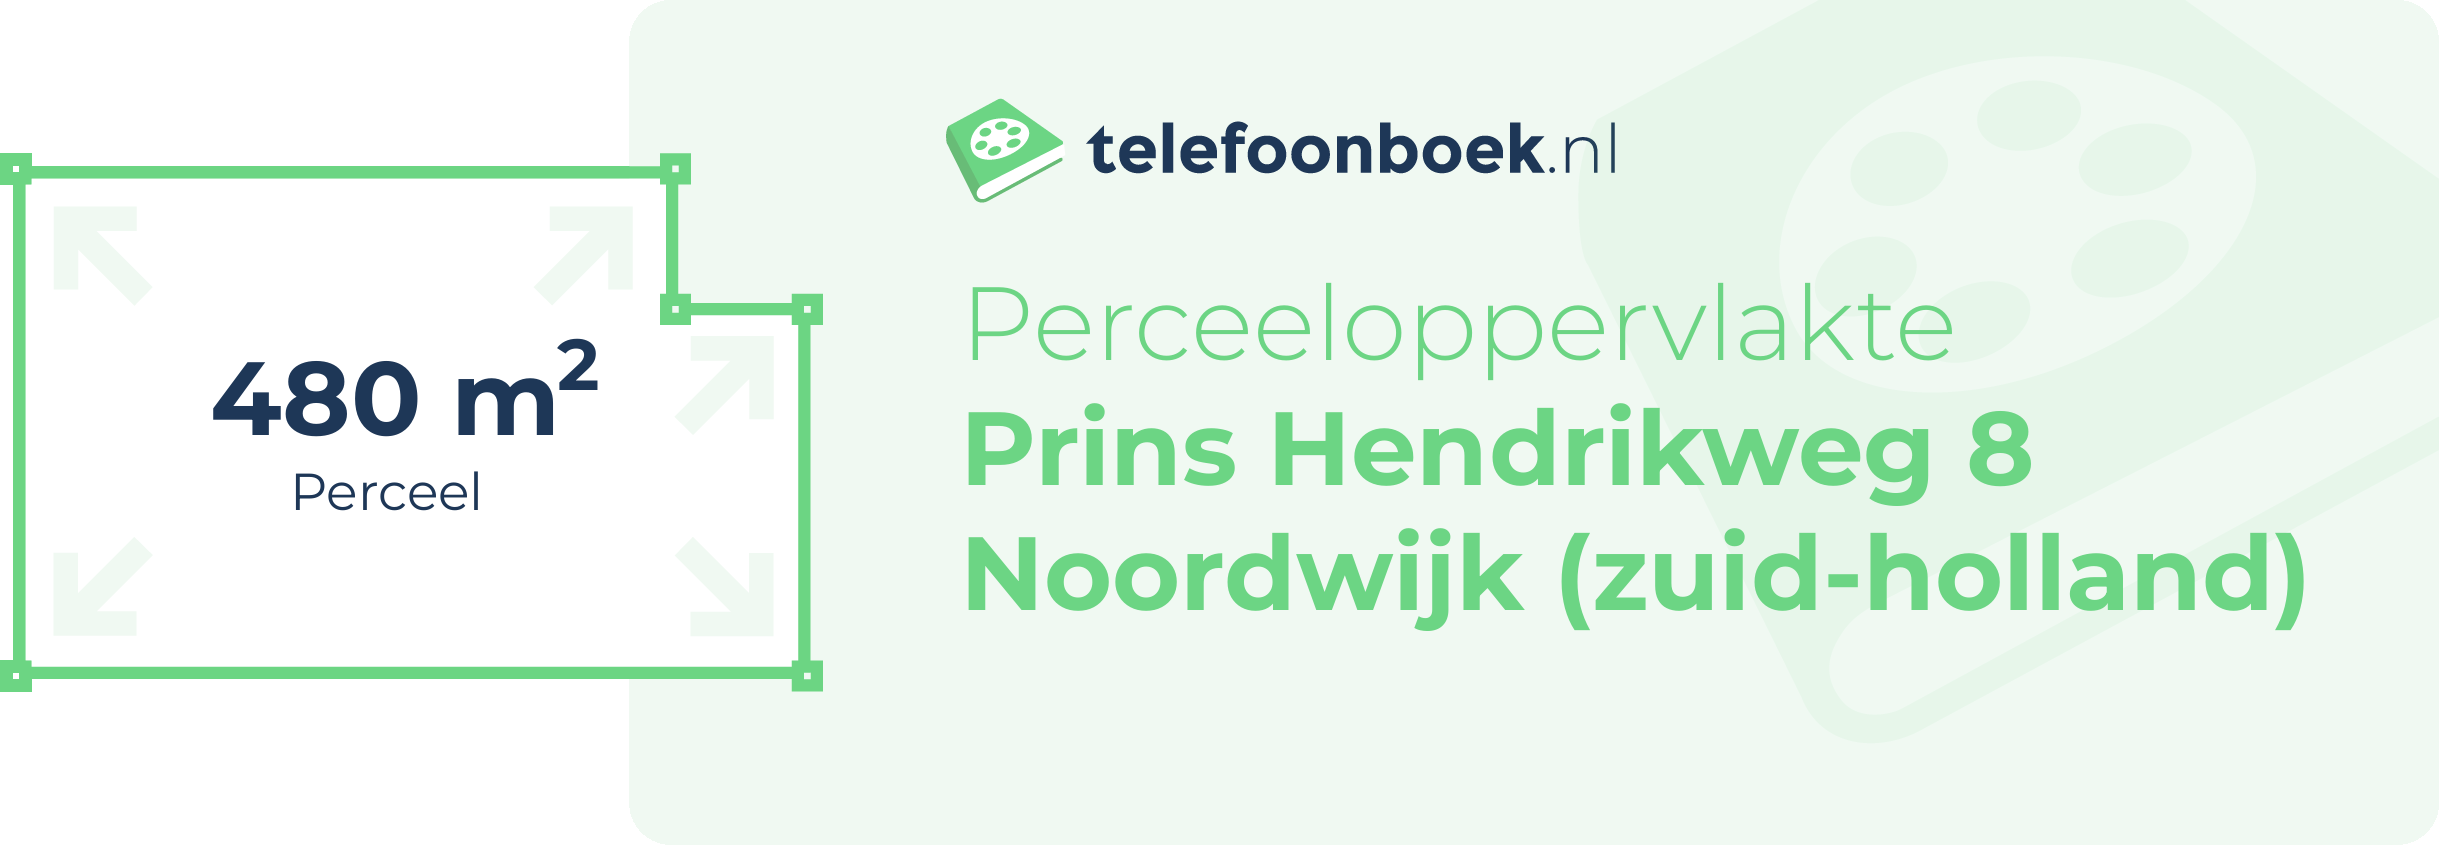 Perceeloppervlakte Prins Hendrikweg 8 Noordwijk (Zuid-Holland)